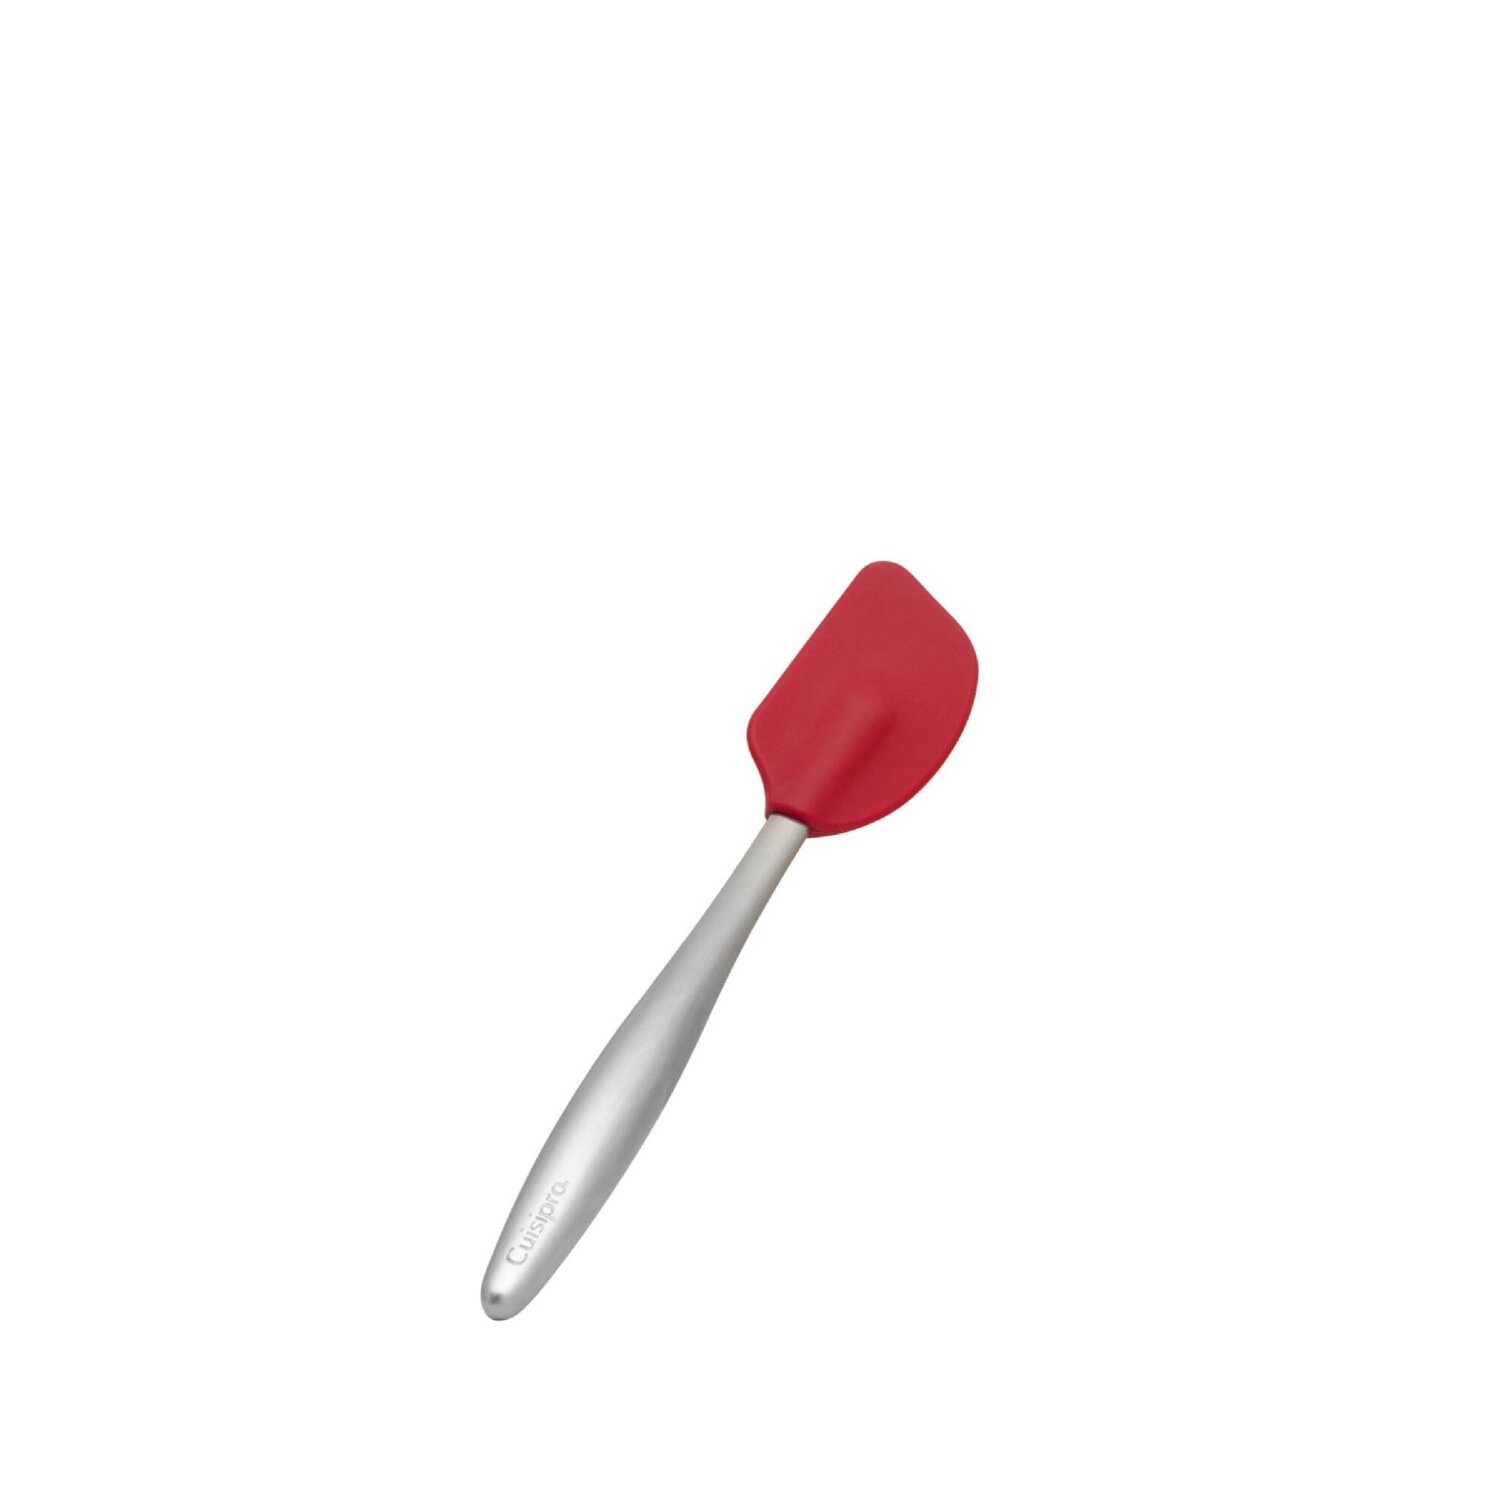 CUISIPRO 'piccolo tools' mini pannenlikker 20cm rvs/silicone rood  PROMO 18,95 -20%